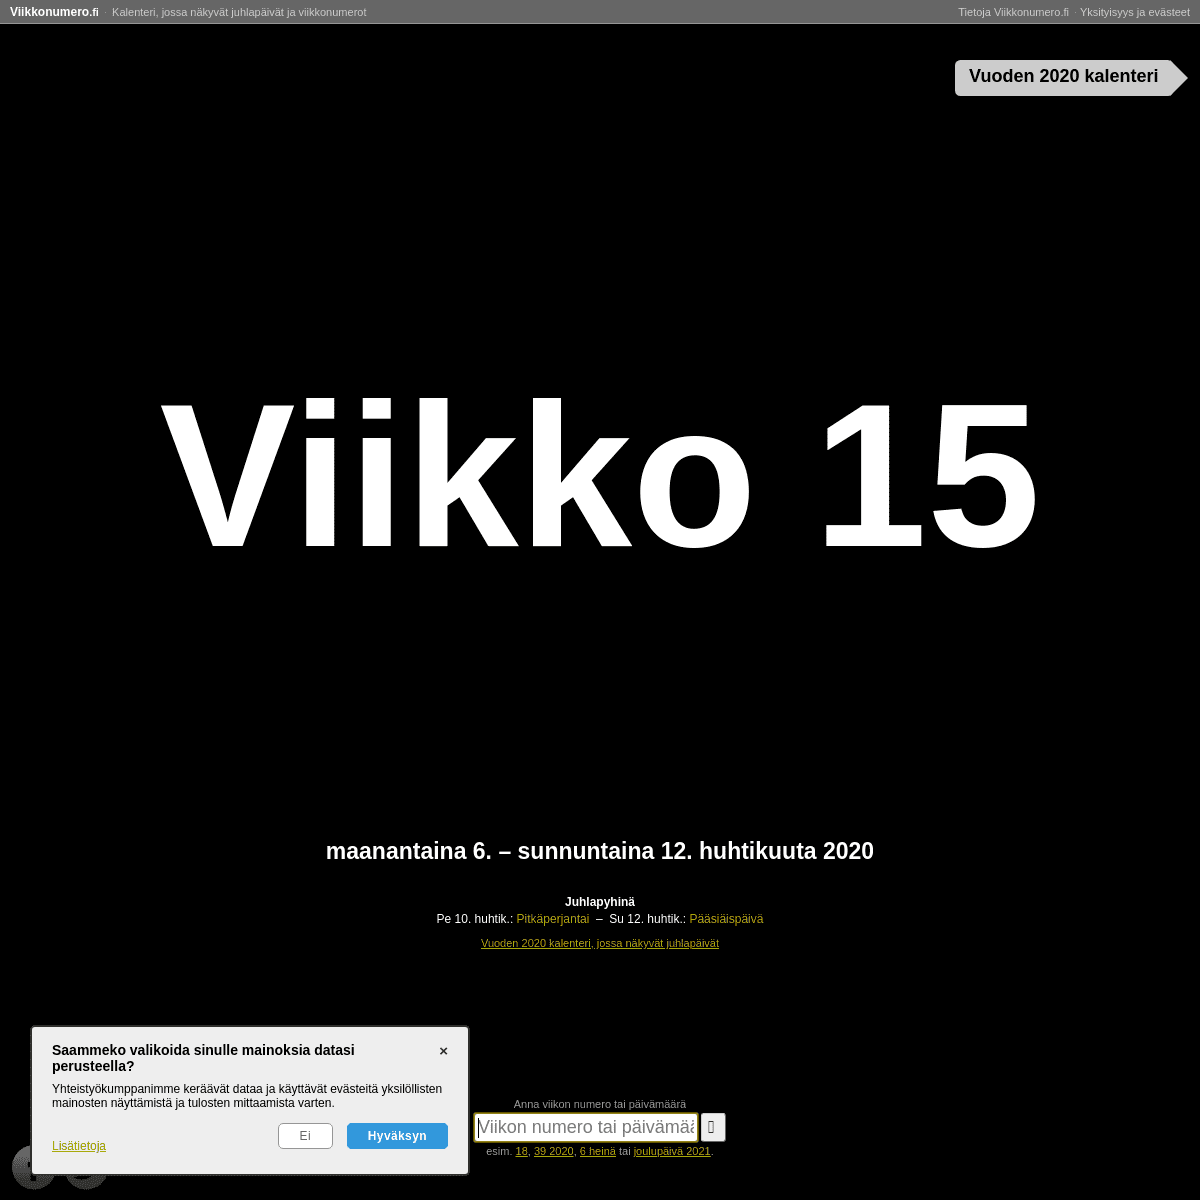 A complete backup of viikkonumero.fi